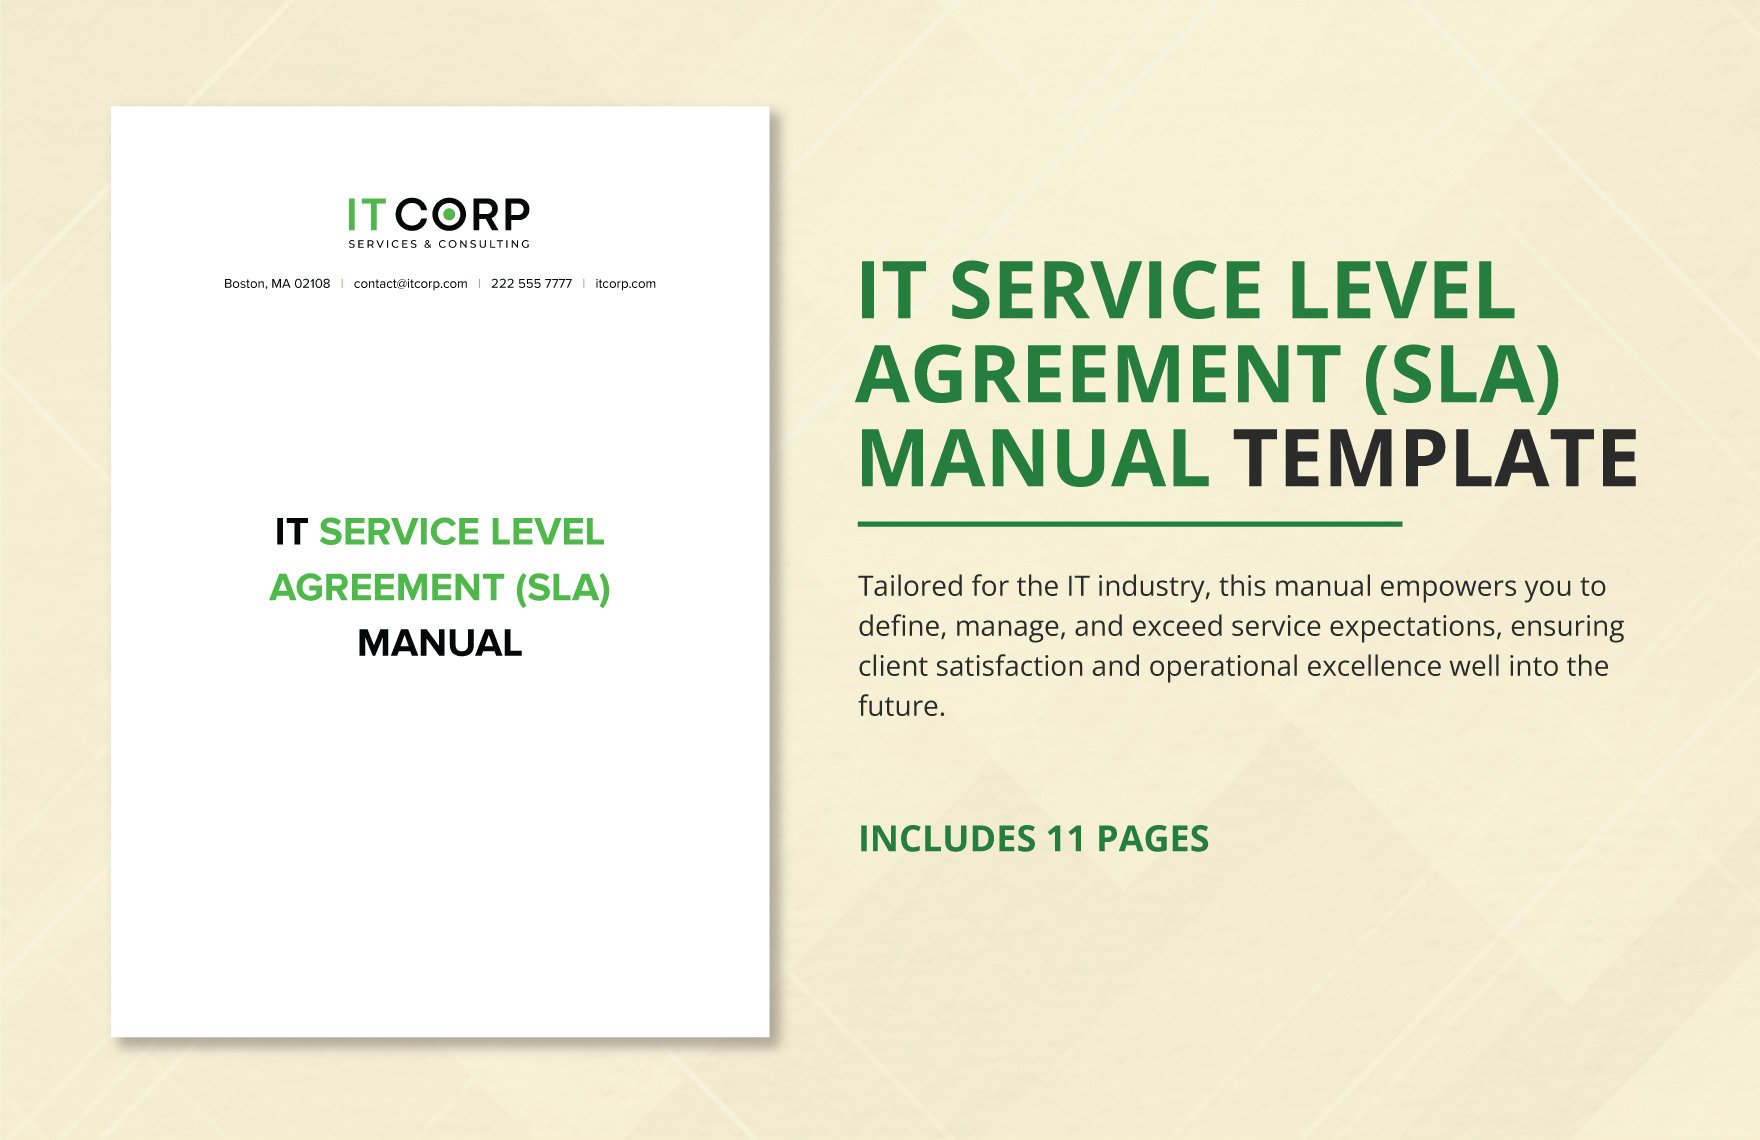 IT Service Level Agreement (SLA) Manual Template